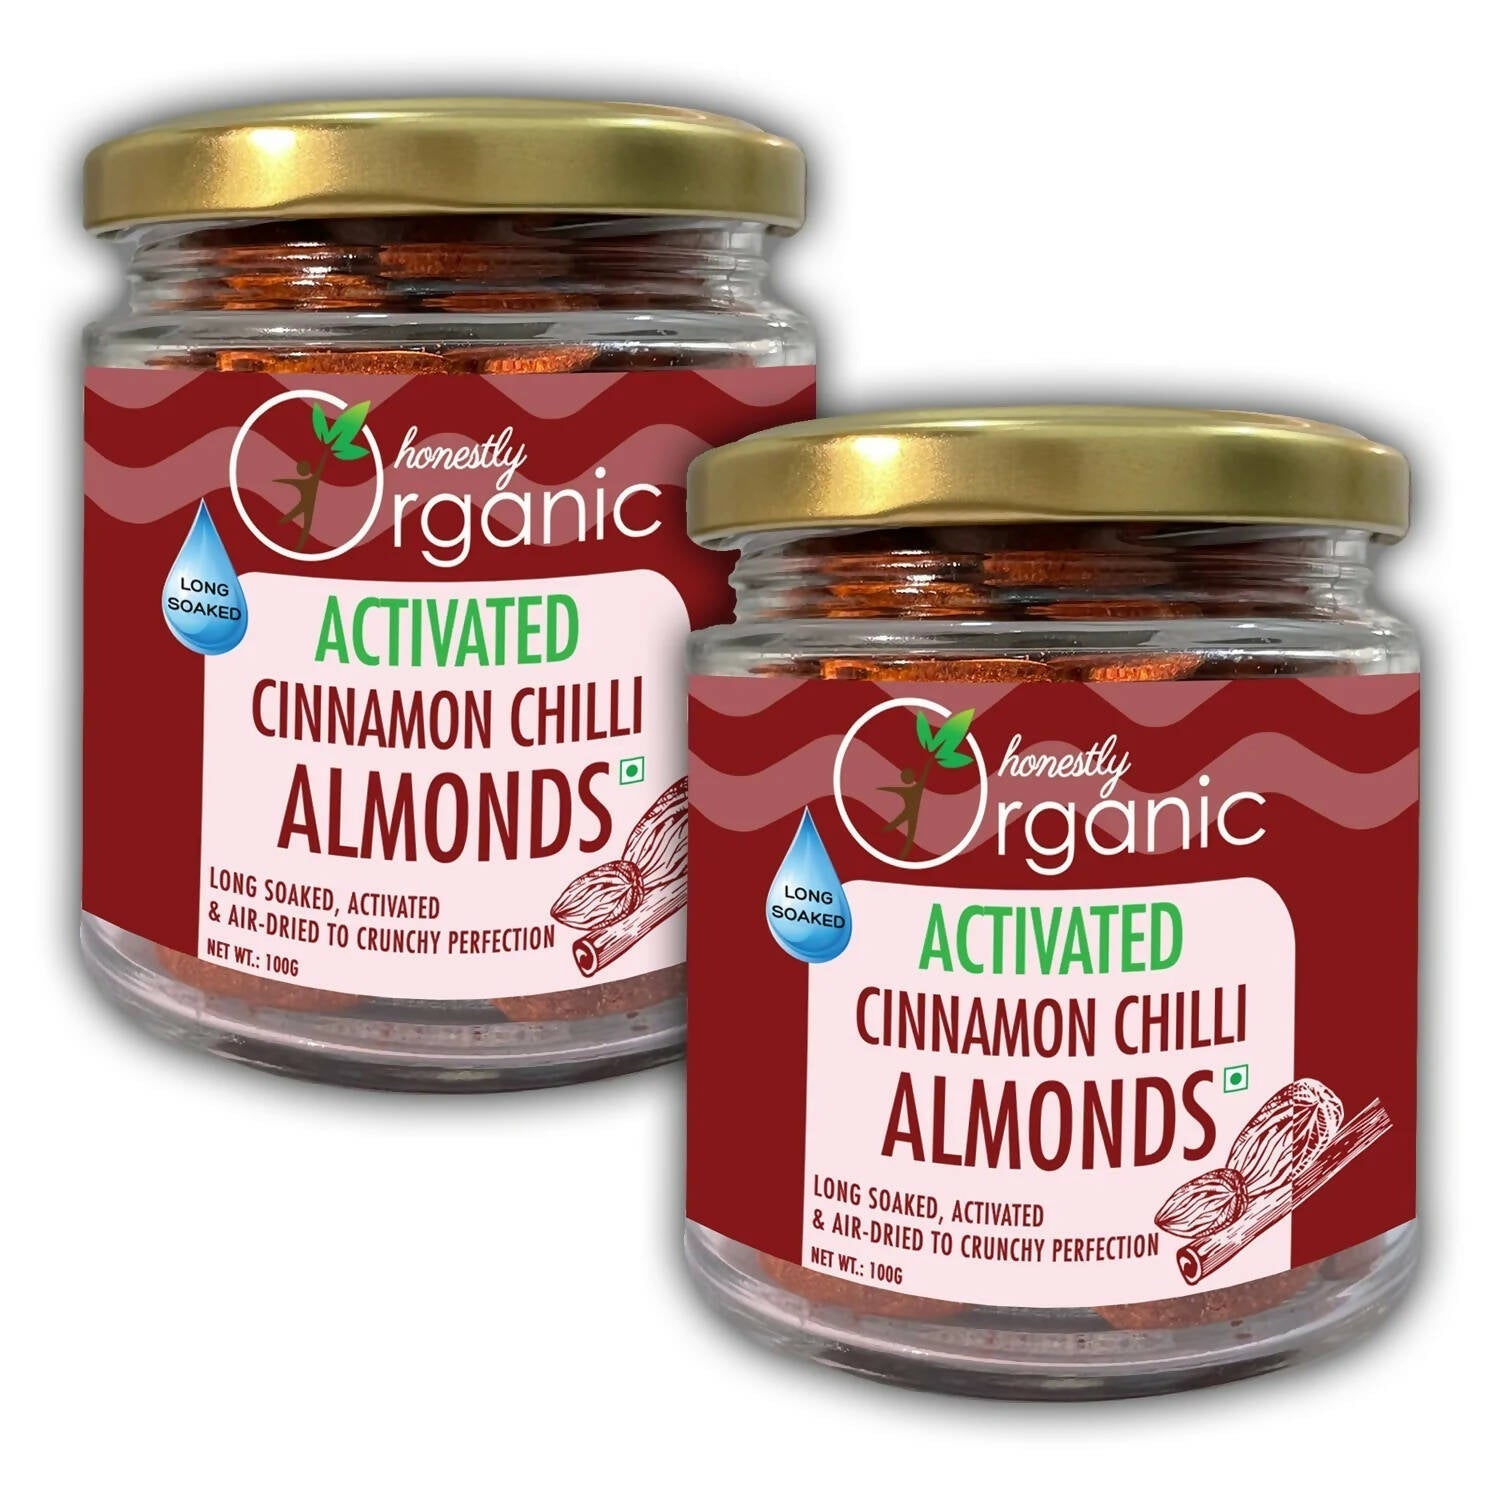 D-Alive Honestly Organic Activated Cinnamon Chilli Almonds - buy in USA, Australia, Canada